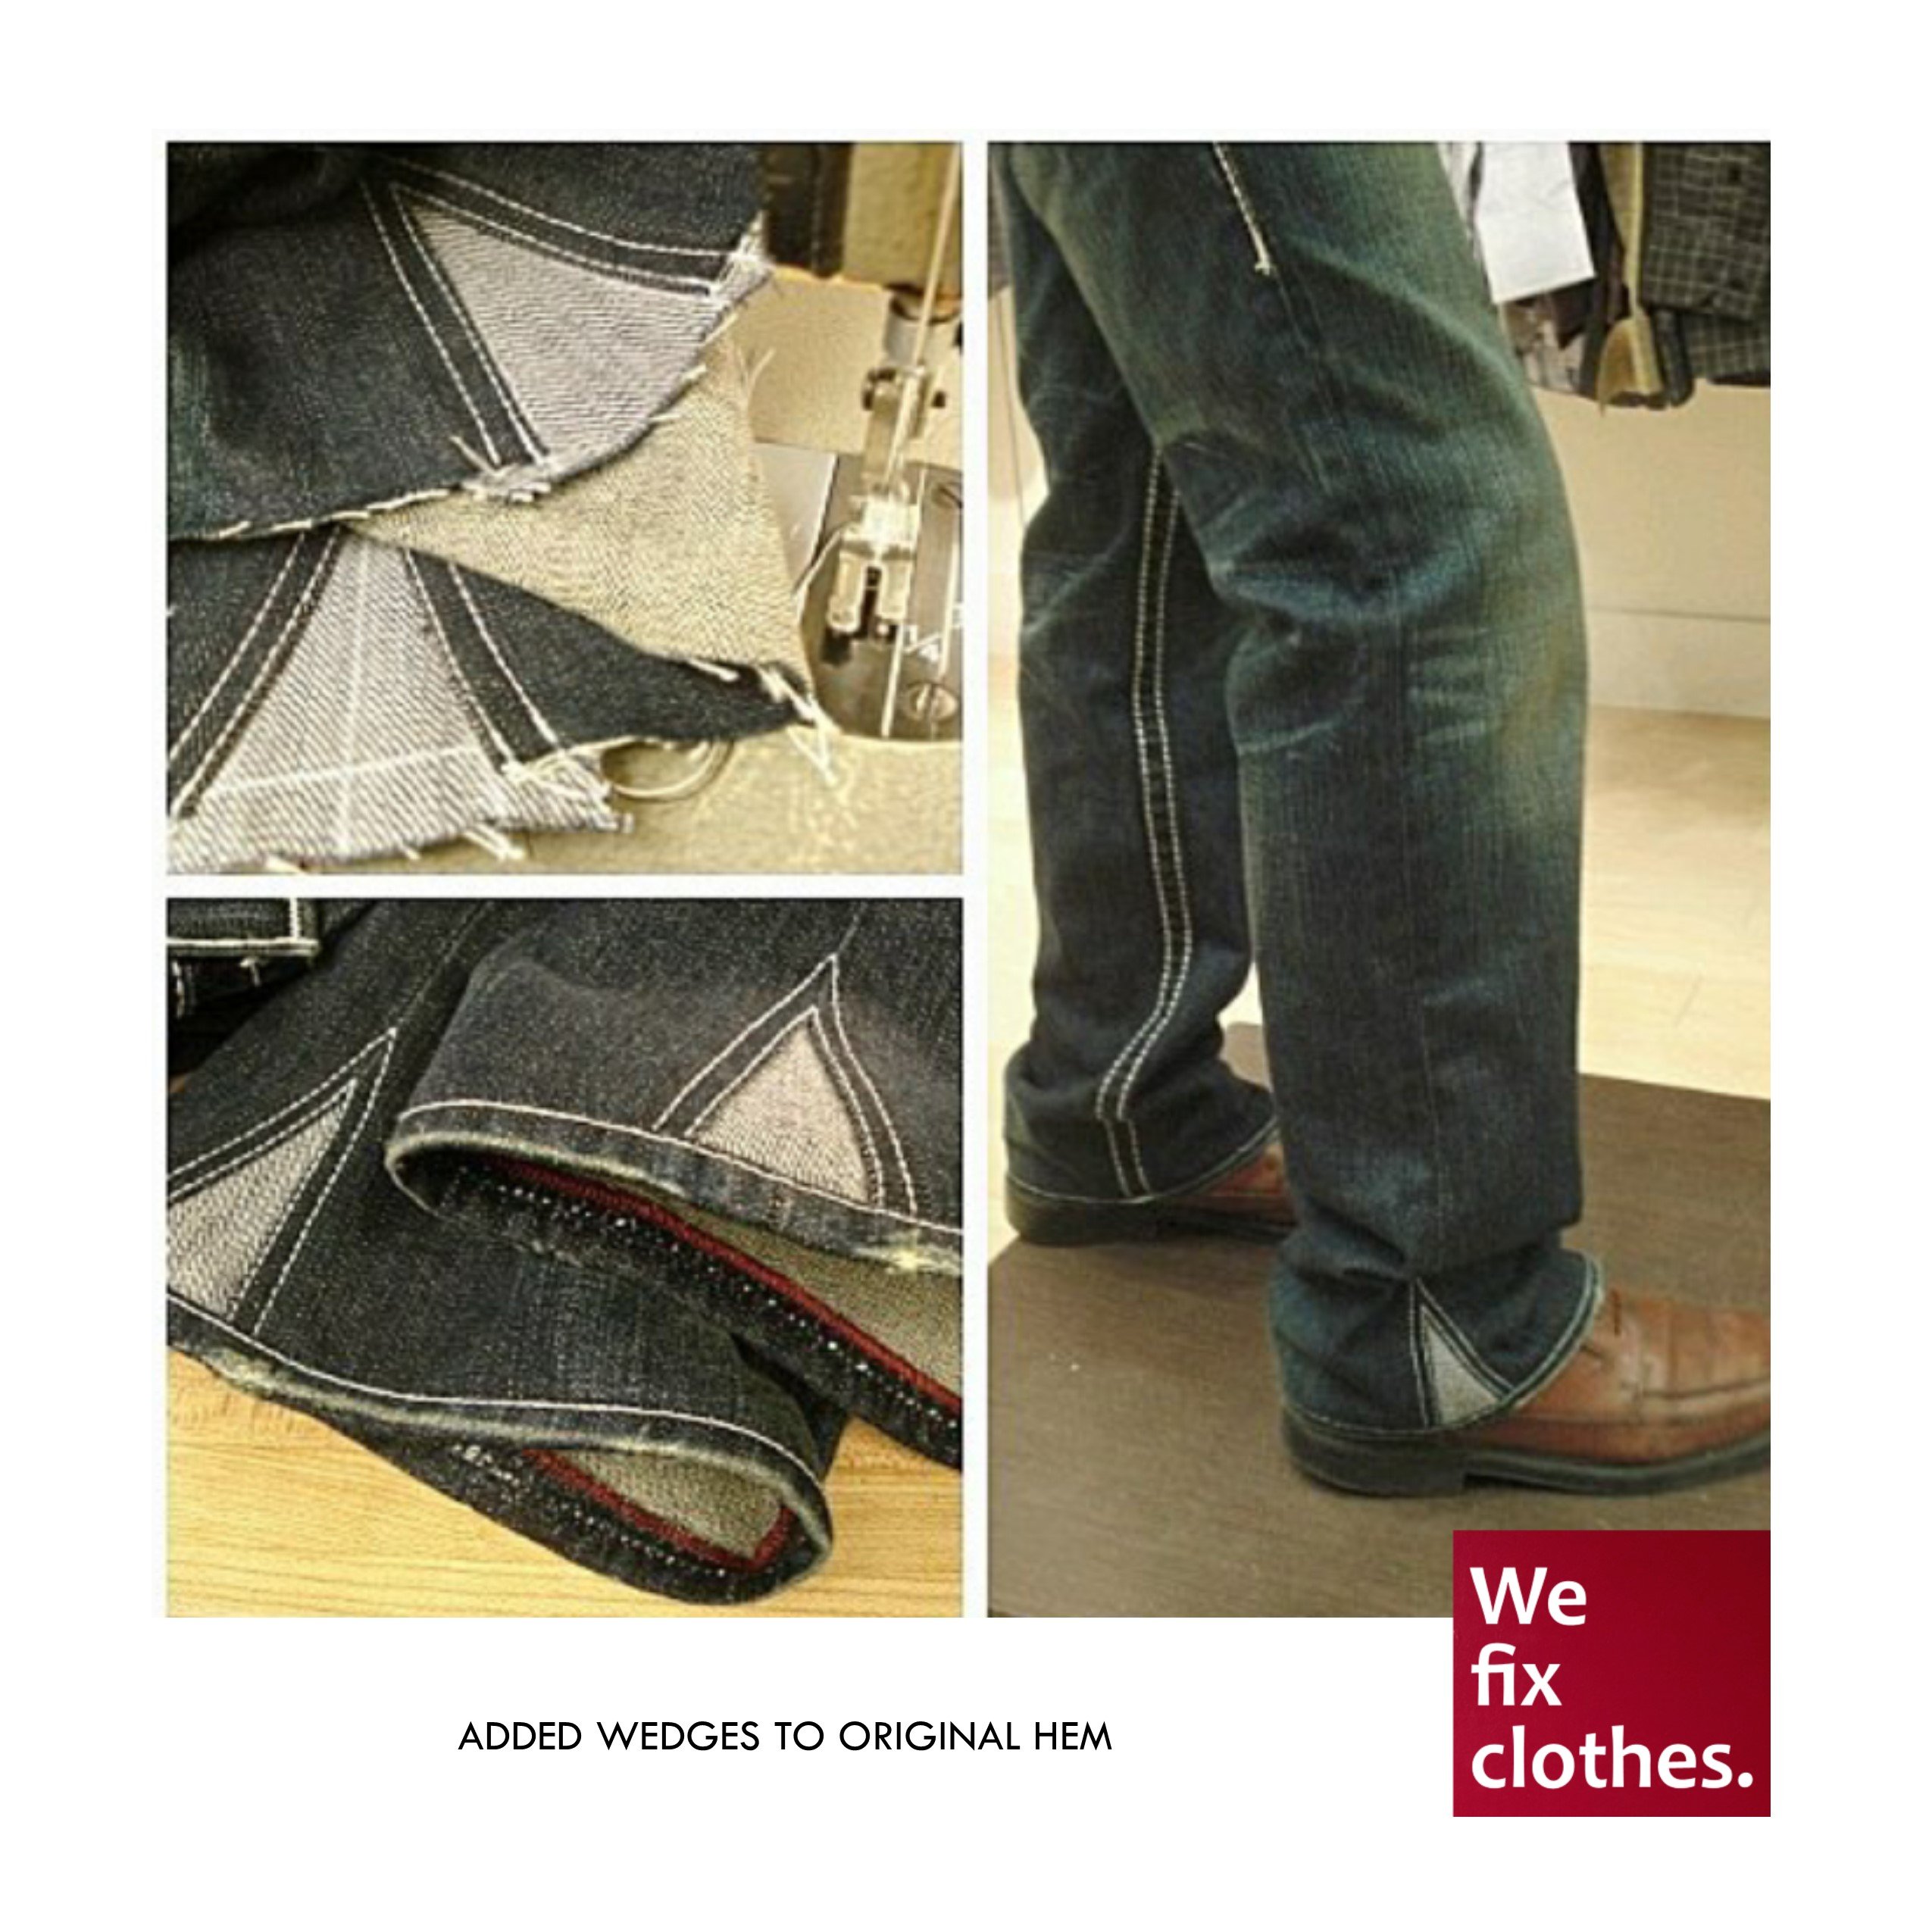 We fix clothes. - Services